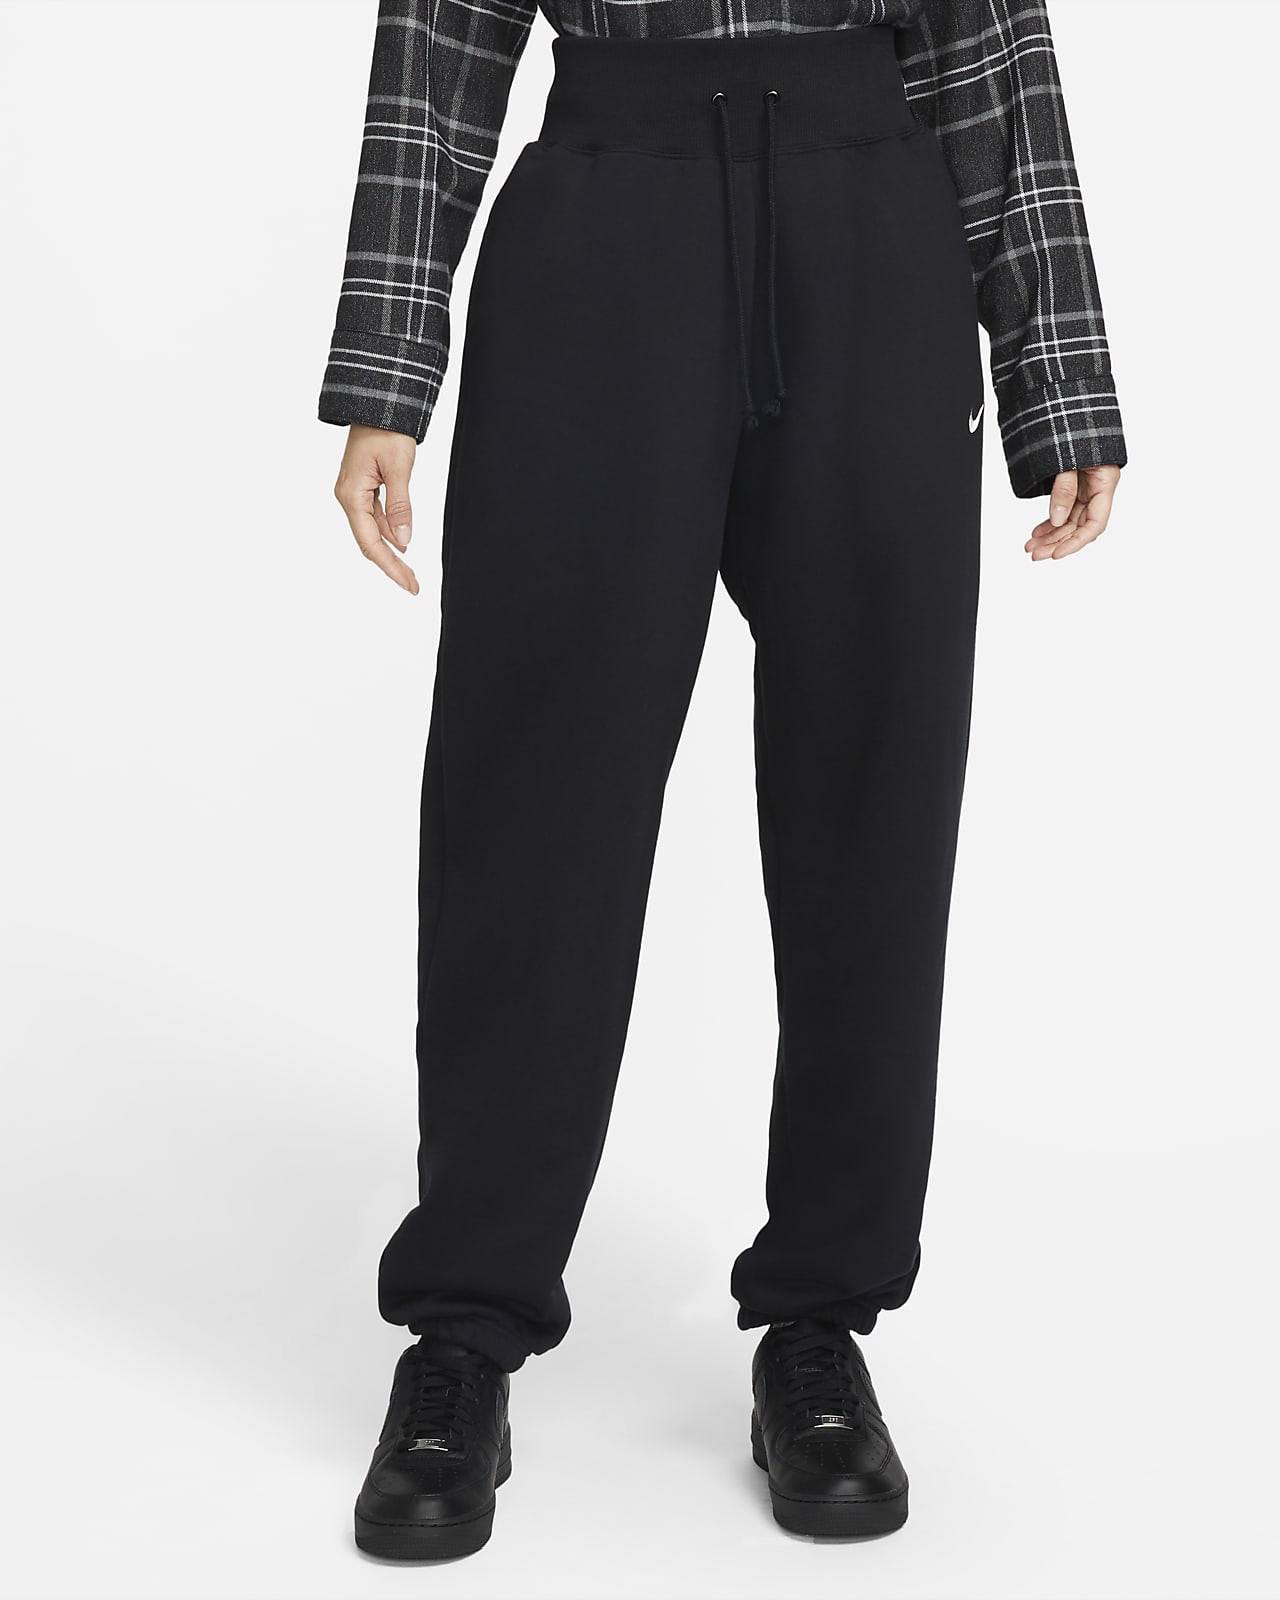 Nike Sportswear Phoenix Fleece Pantalons de xandall oversized de cintura alta - Dona